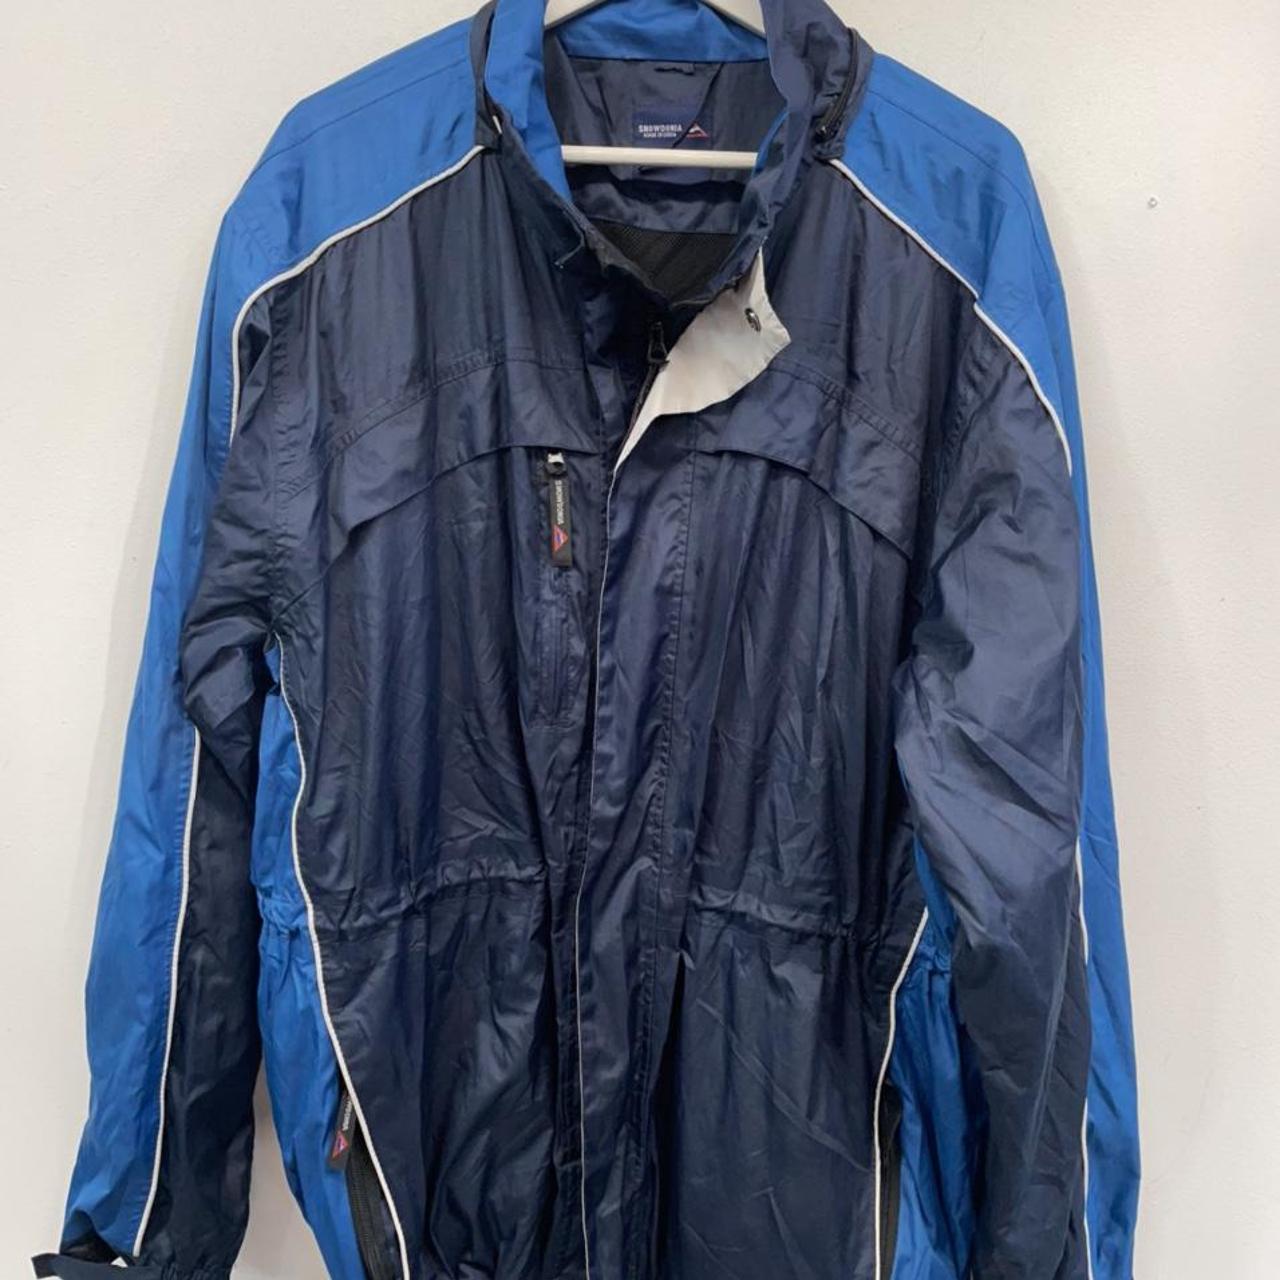 P554 Snowdonia blue shell jacket Size XL #snowdonia... - Depop